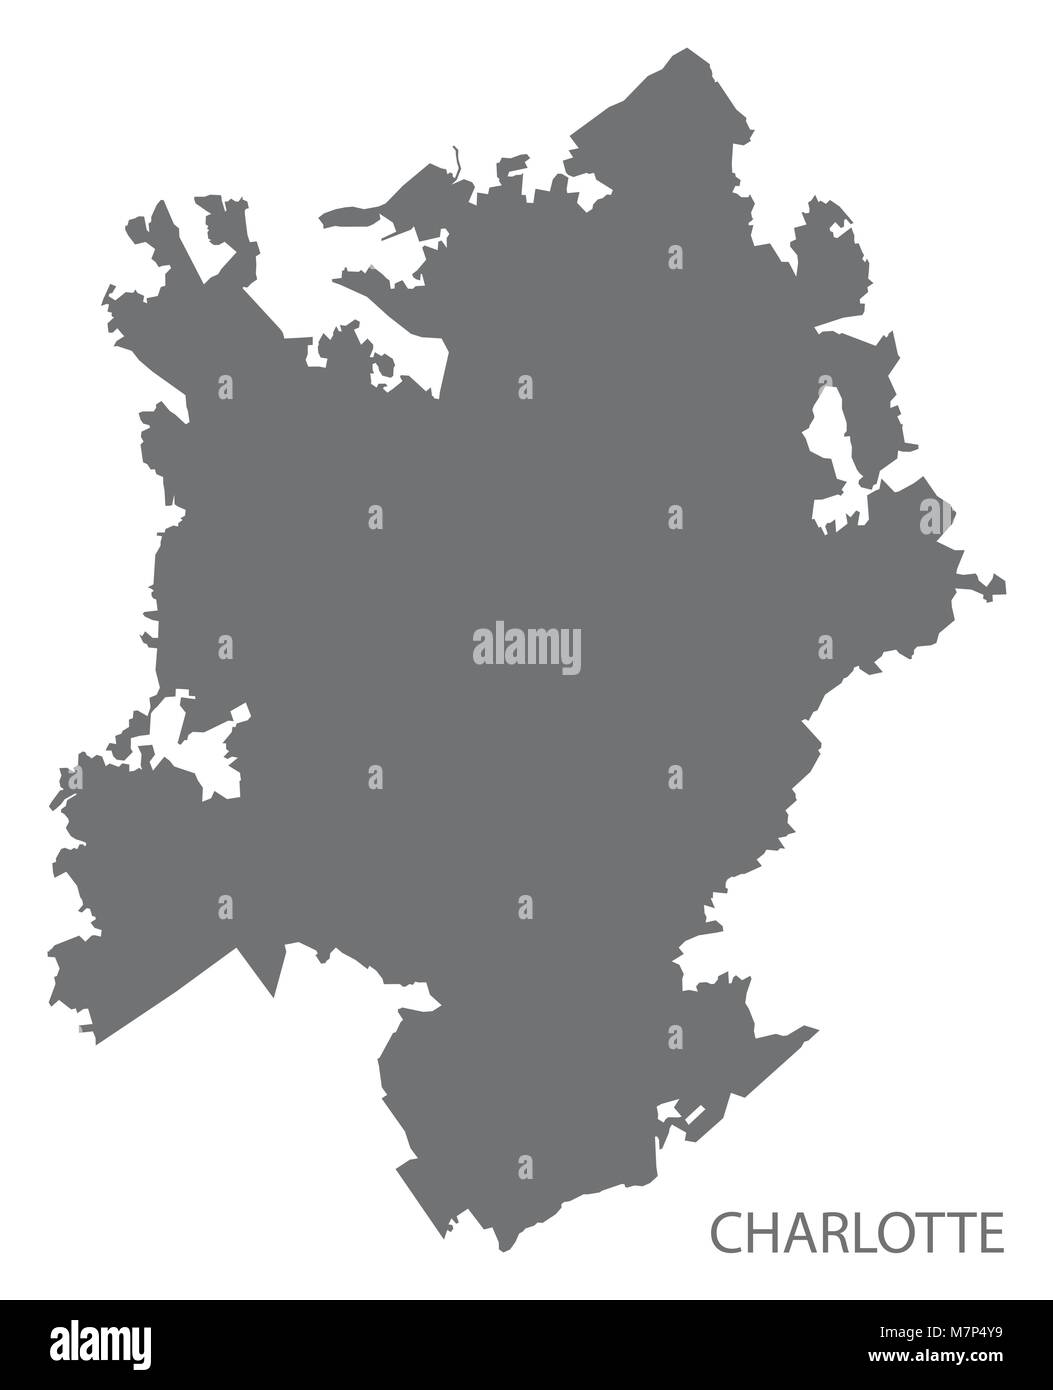 Charlotte North Carolina city map grey illustration silhouette shape Stock Vector